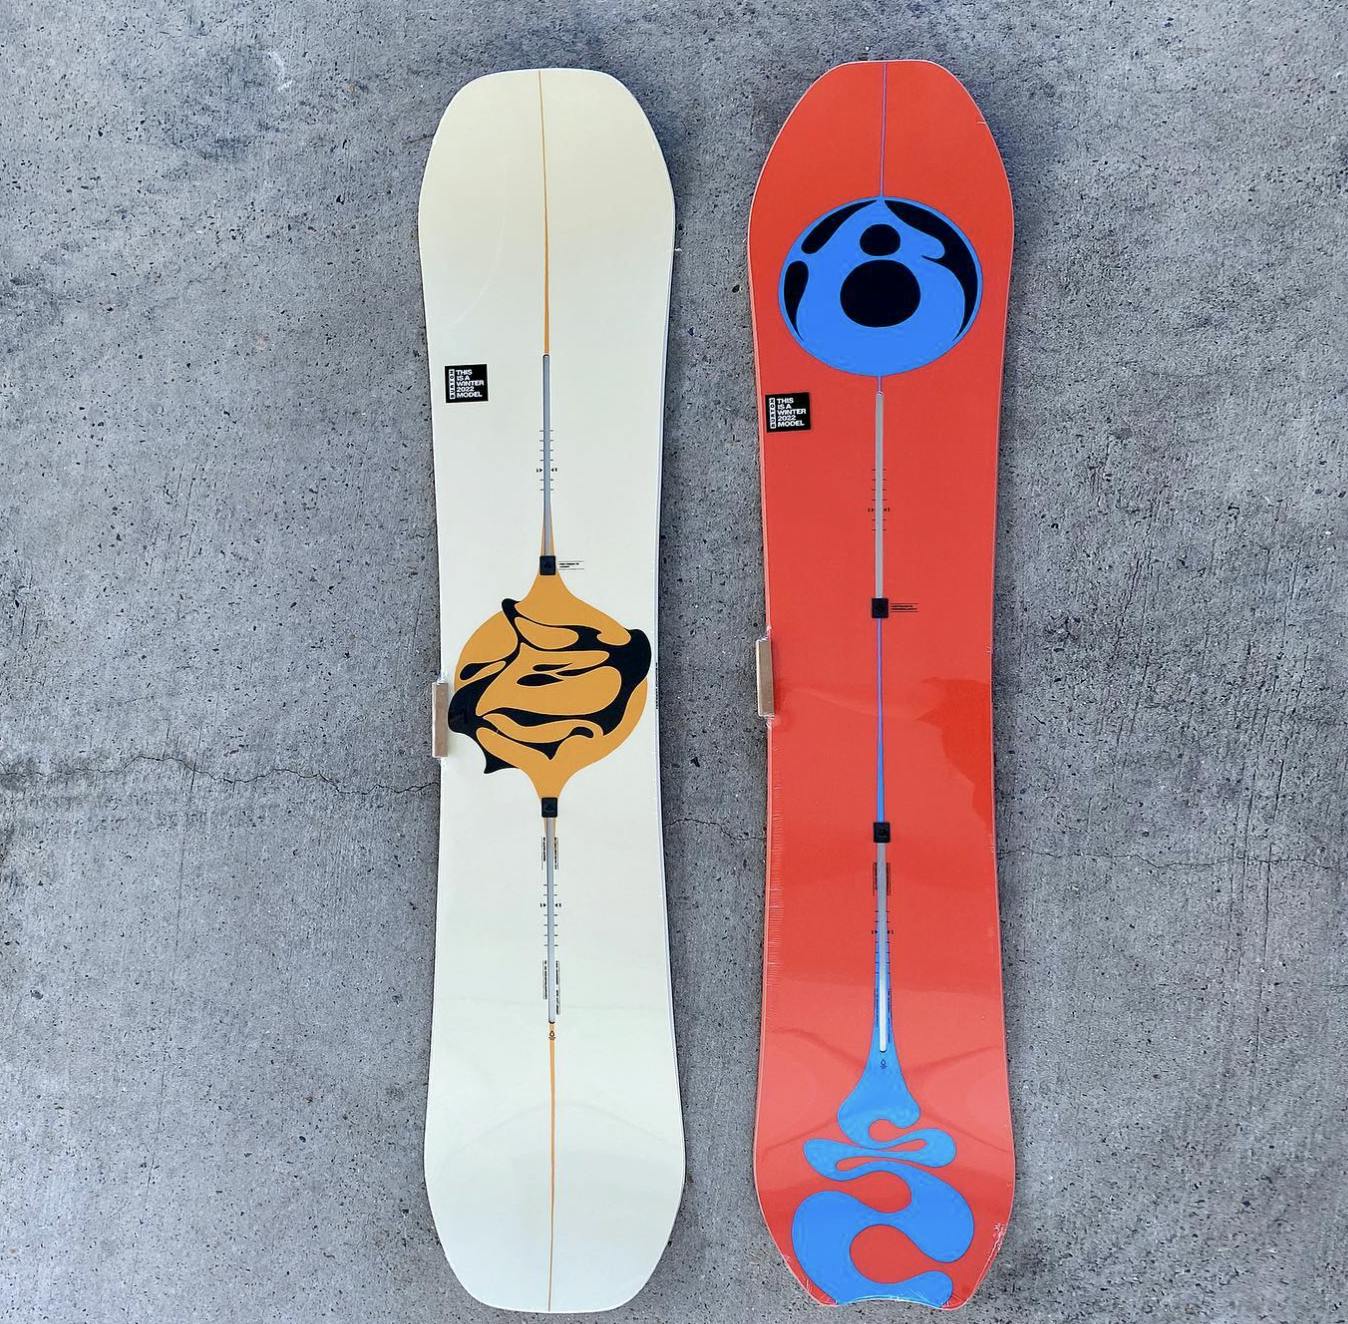 The Burton Deep Thinkwe snowboard next to a Burton Freethinker snowboard. 